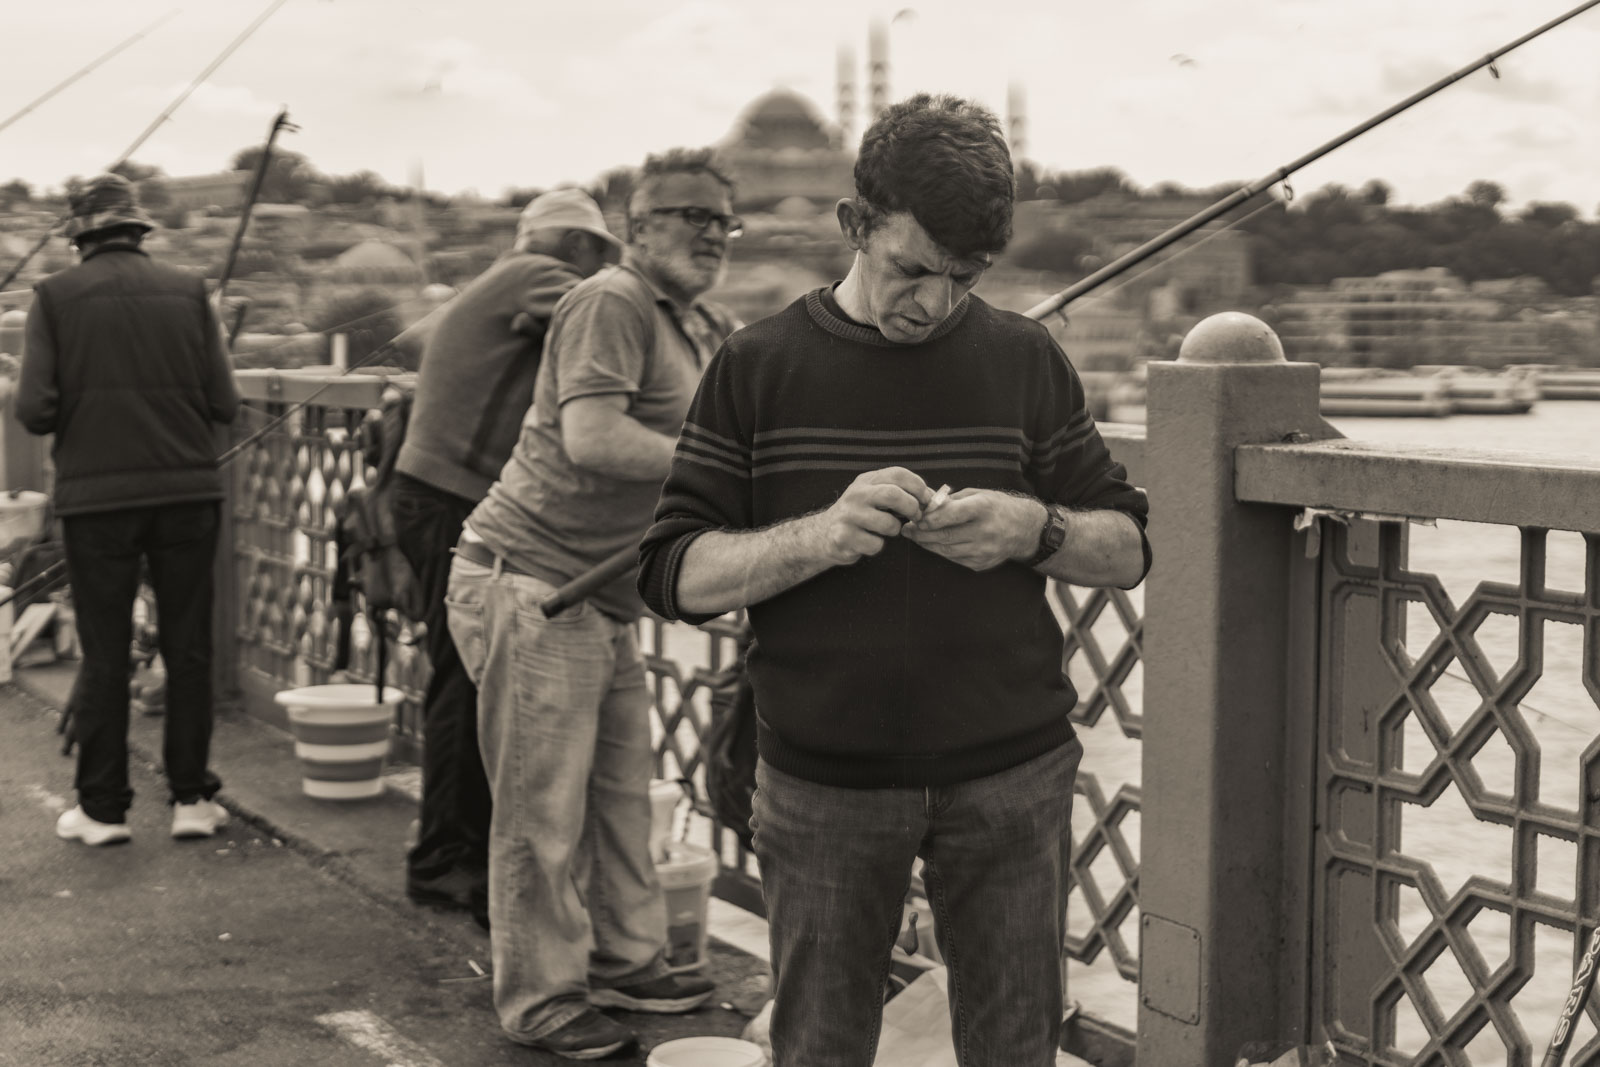 Finding your inner peace - Fisherman at Galata bridge